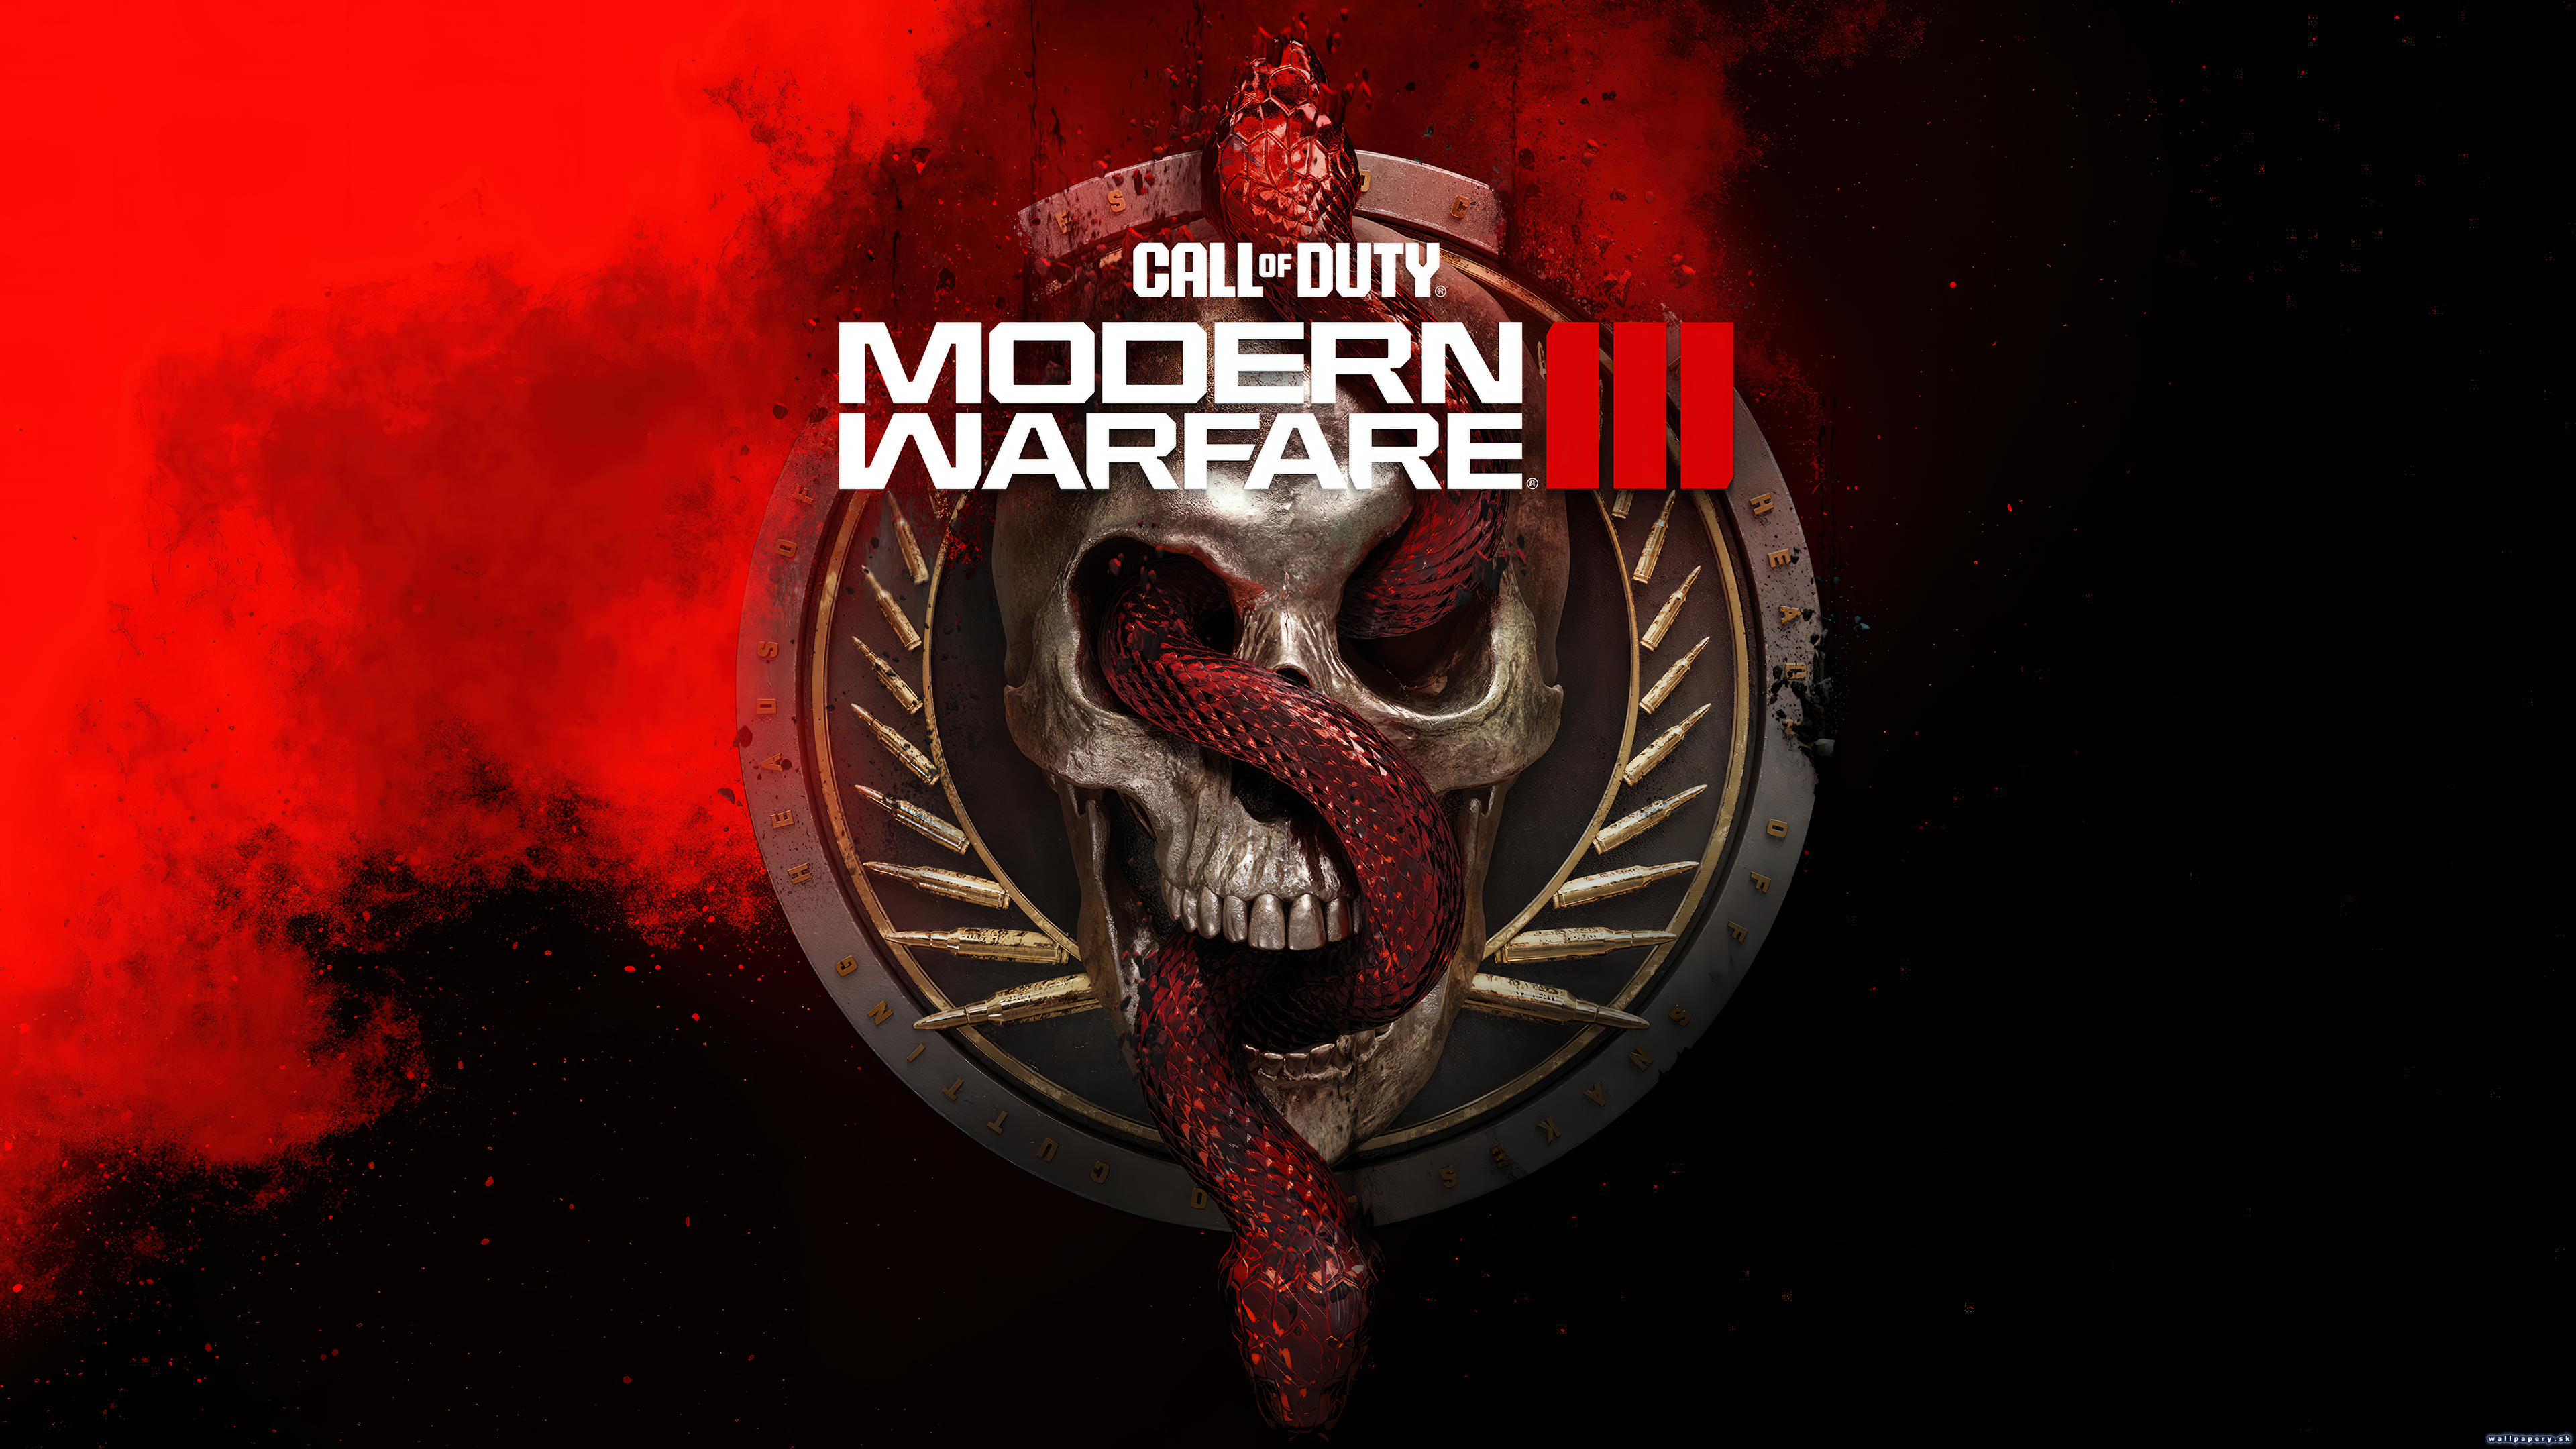 Call of Duty: Modern Warfare III - wallpaper 3